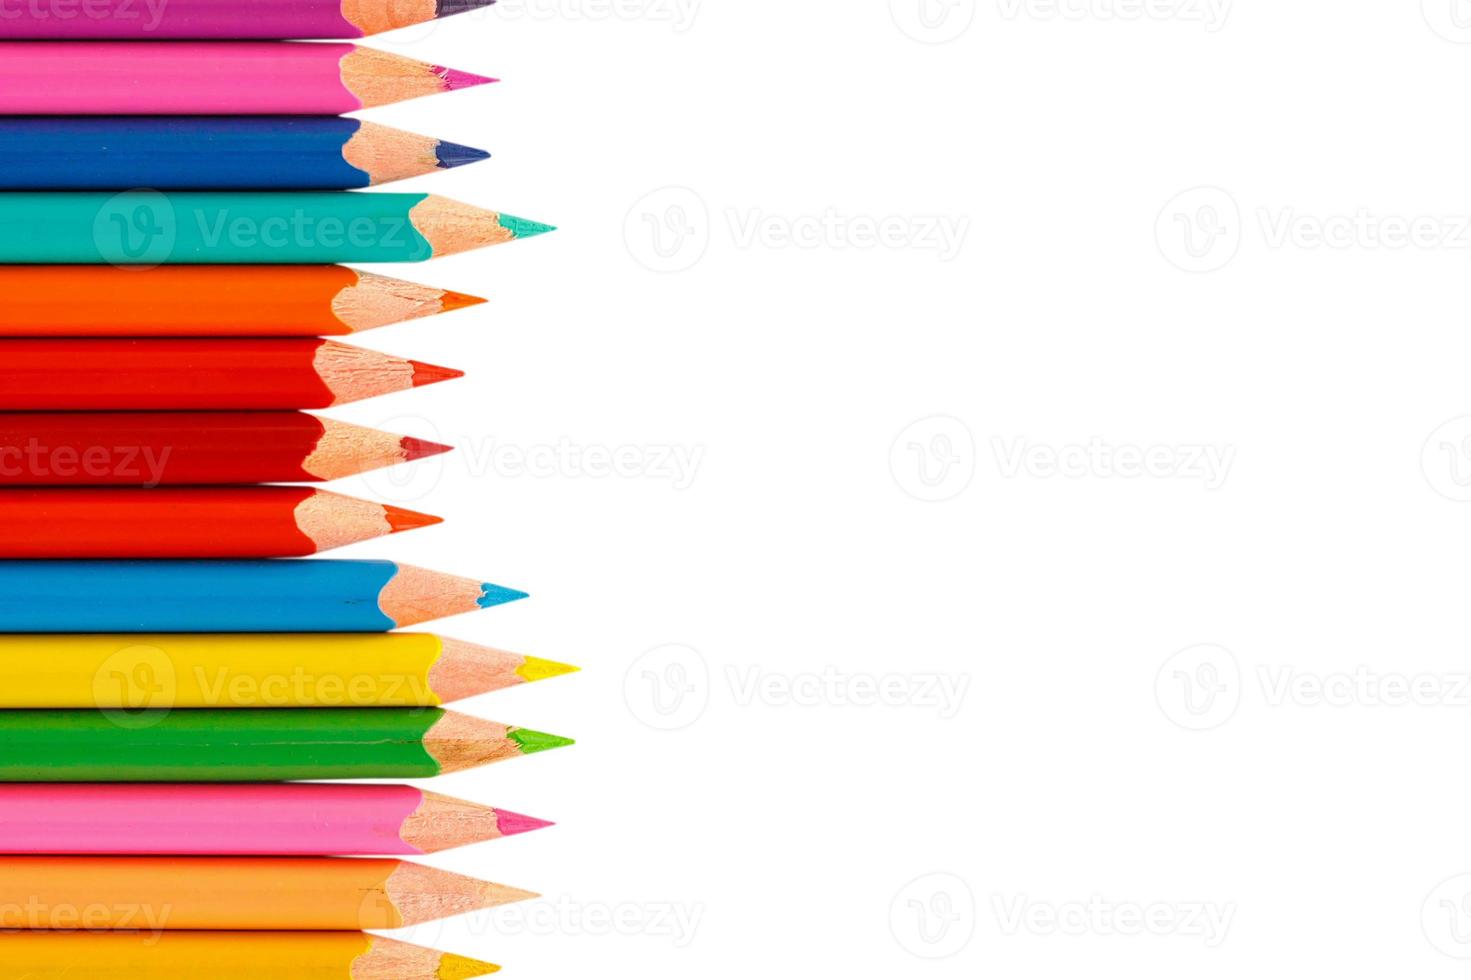 lápis de cor, isolados no fundo branco foto